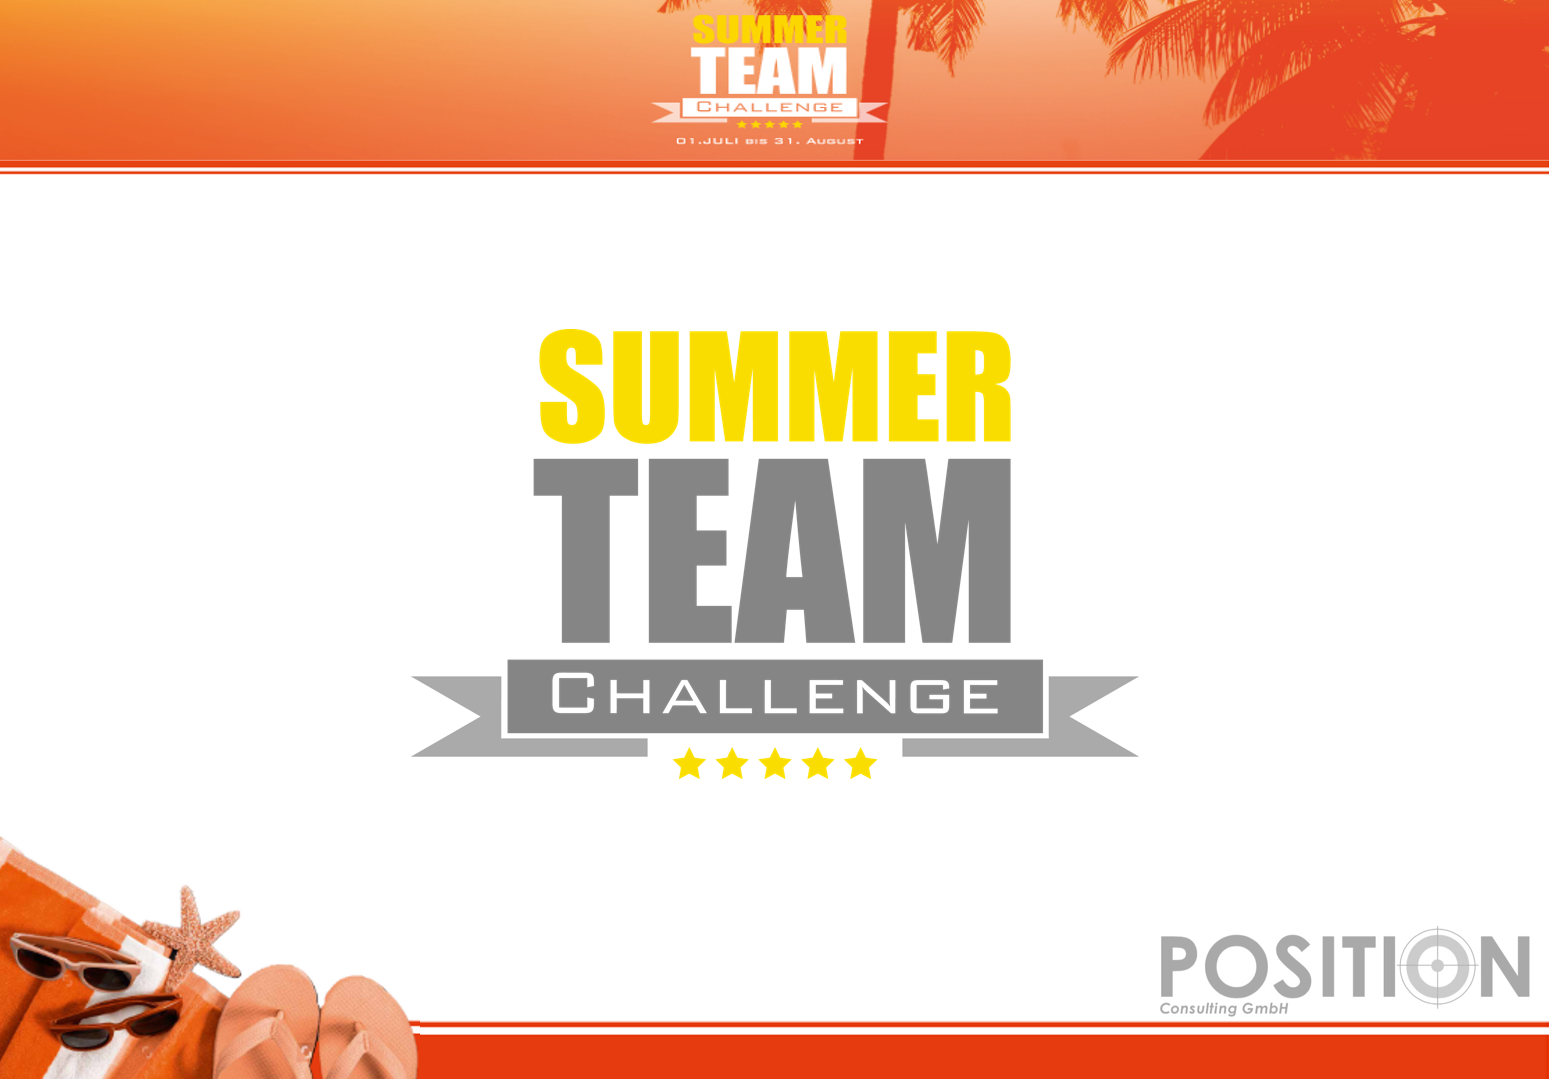 Kampagne "Summer Team Challenge"